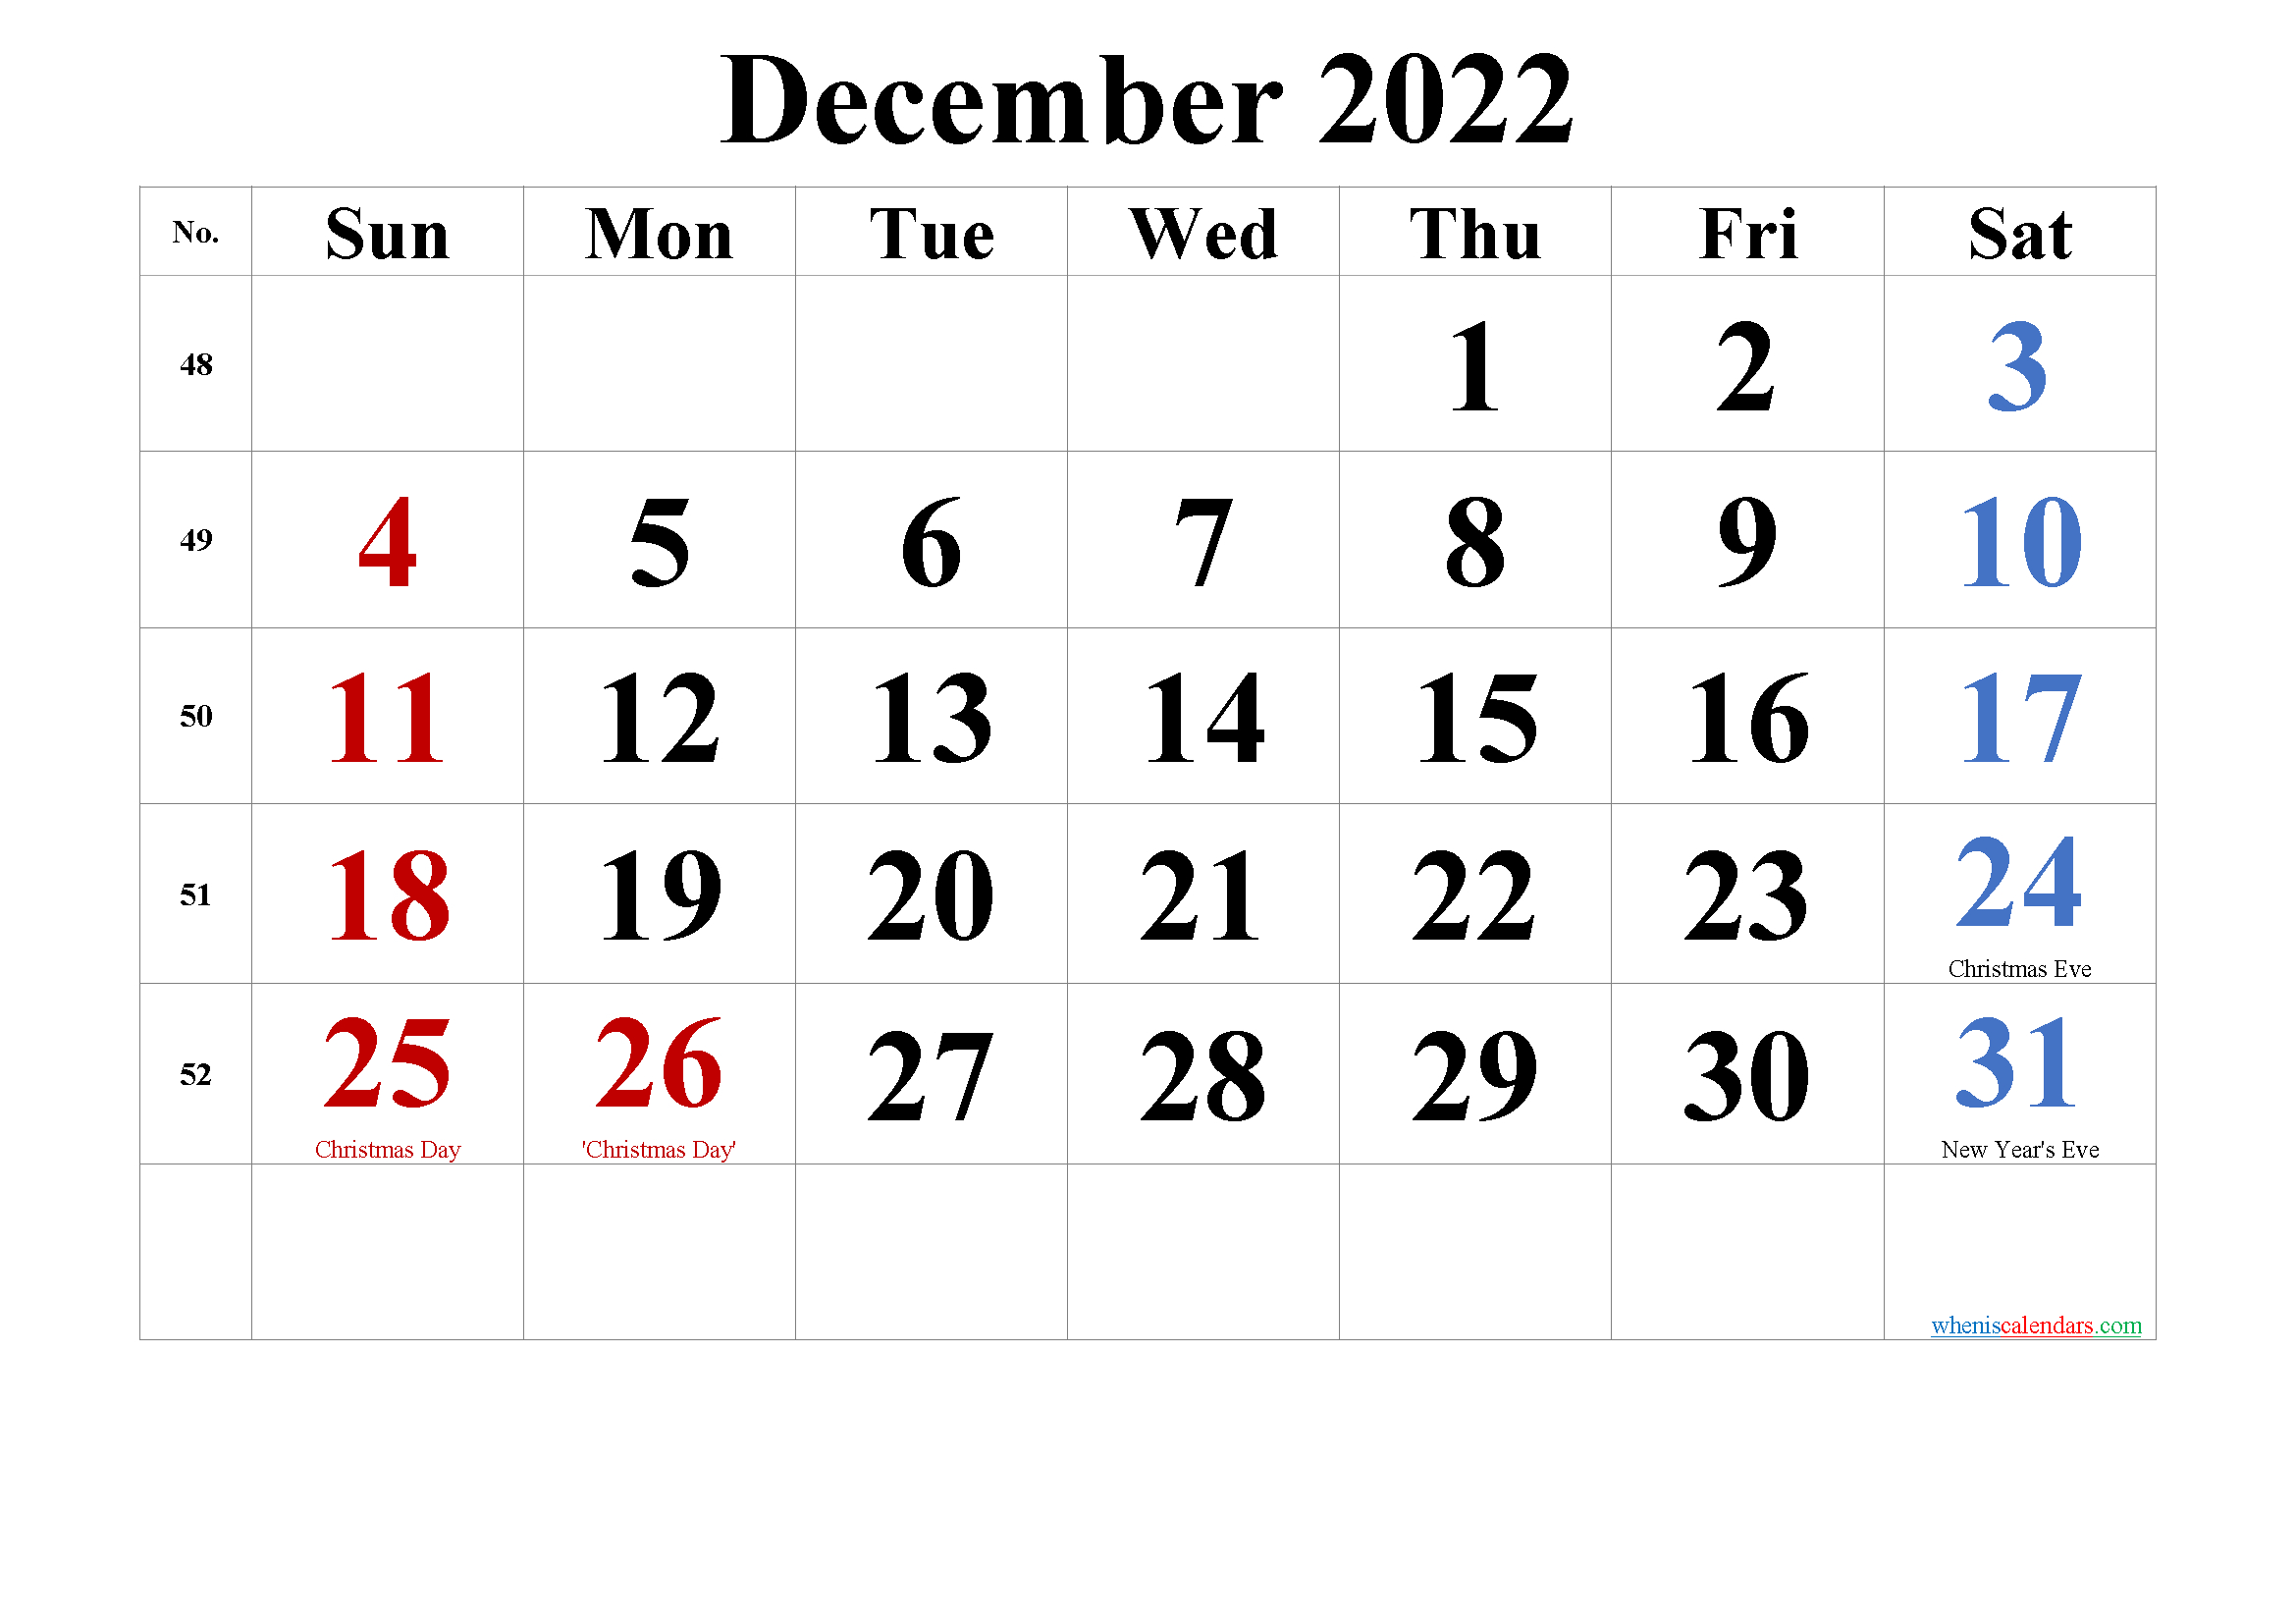 December 2022 Calendar Weekly - Calendar 2022